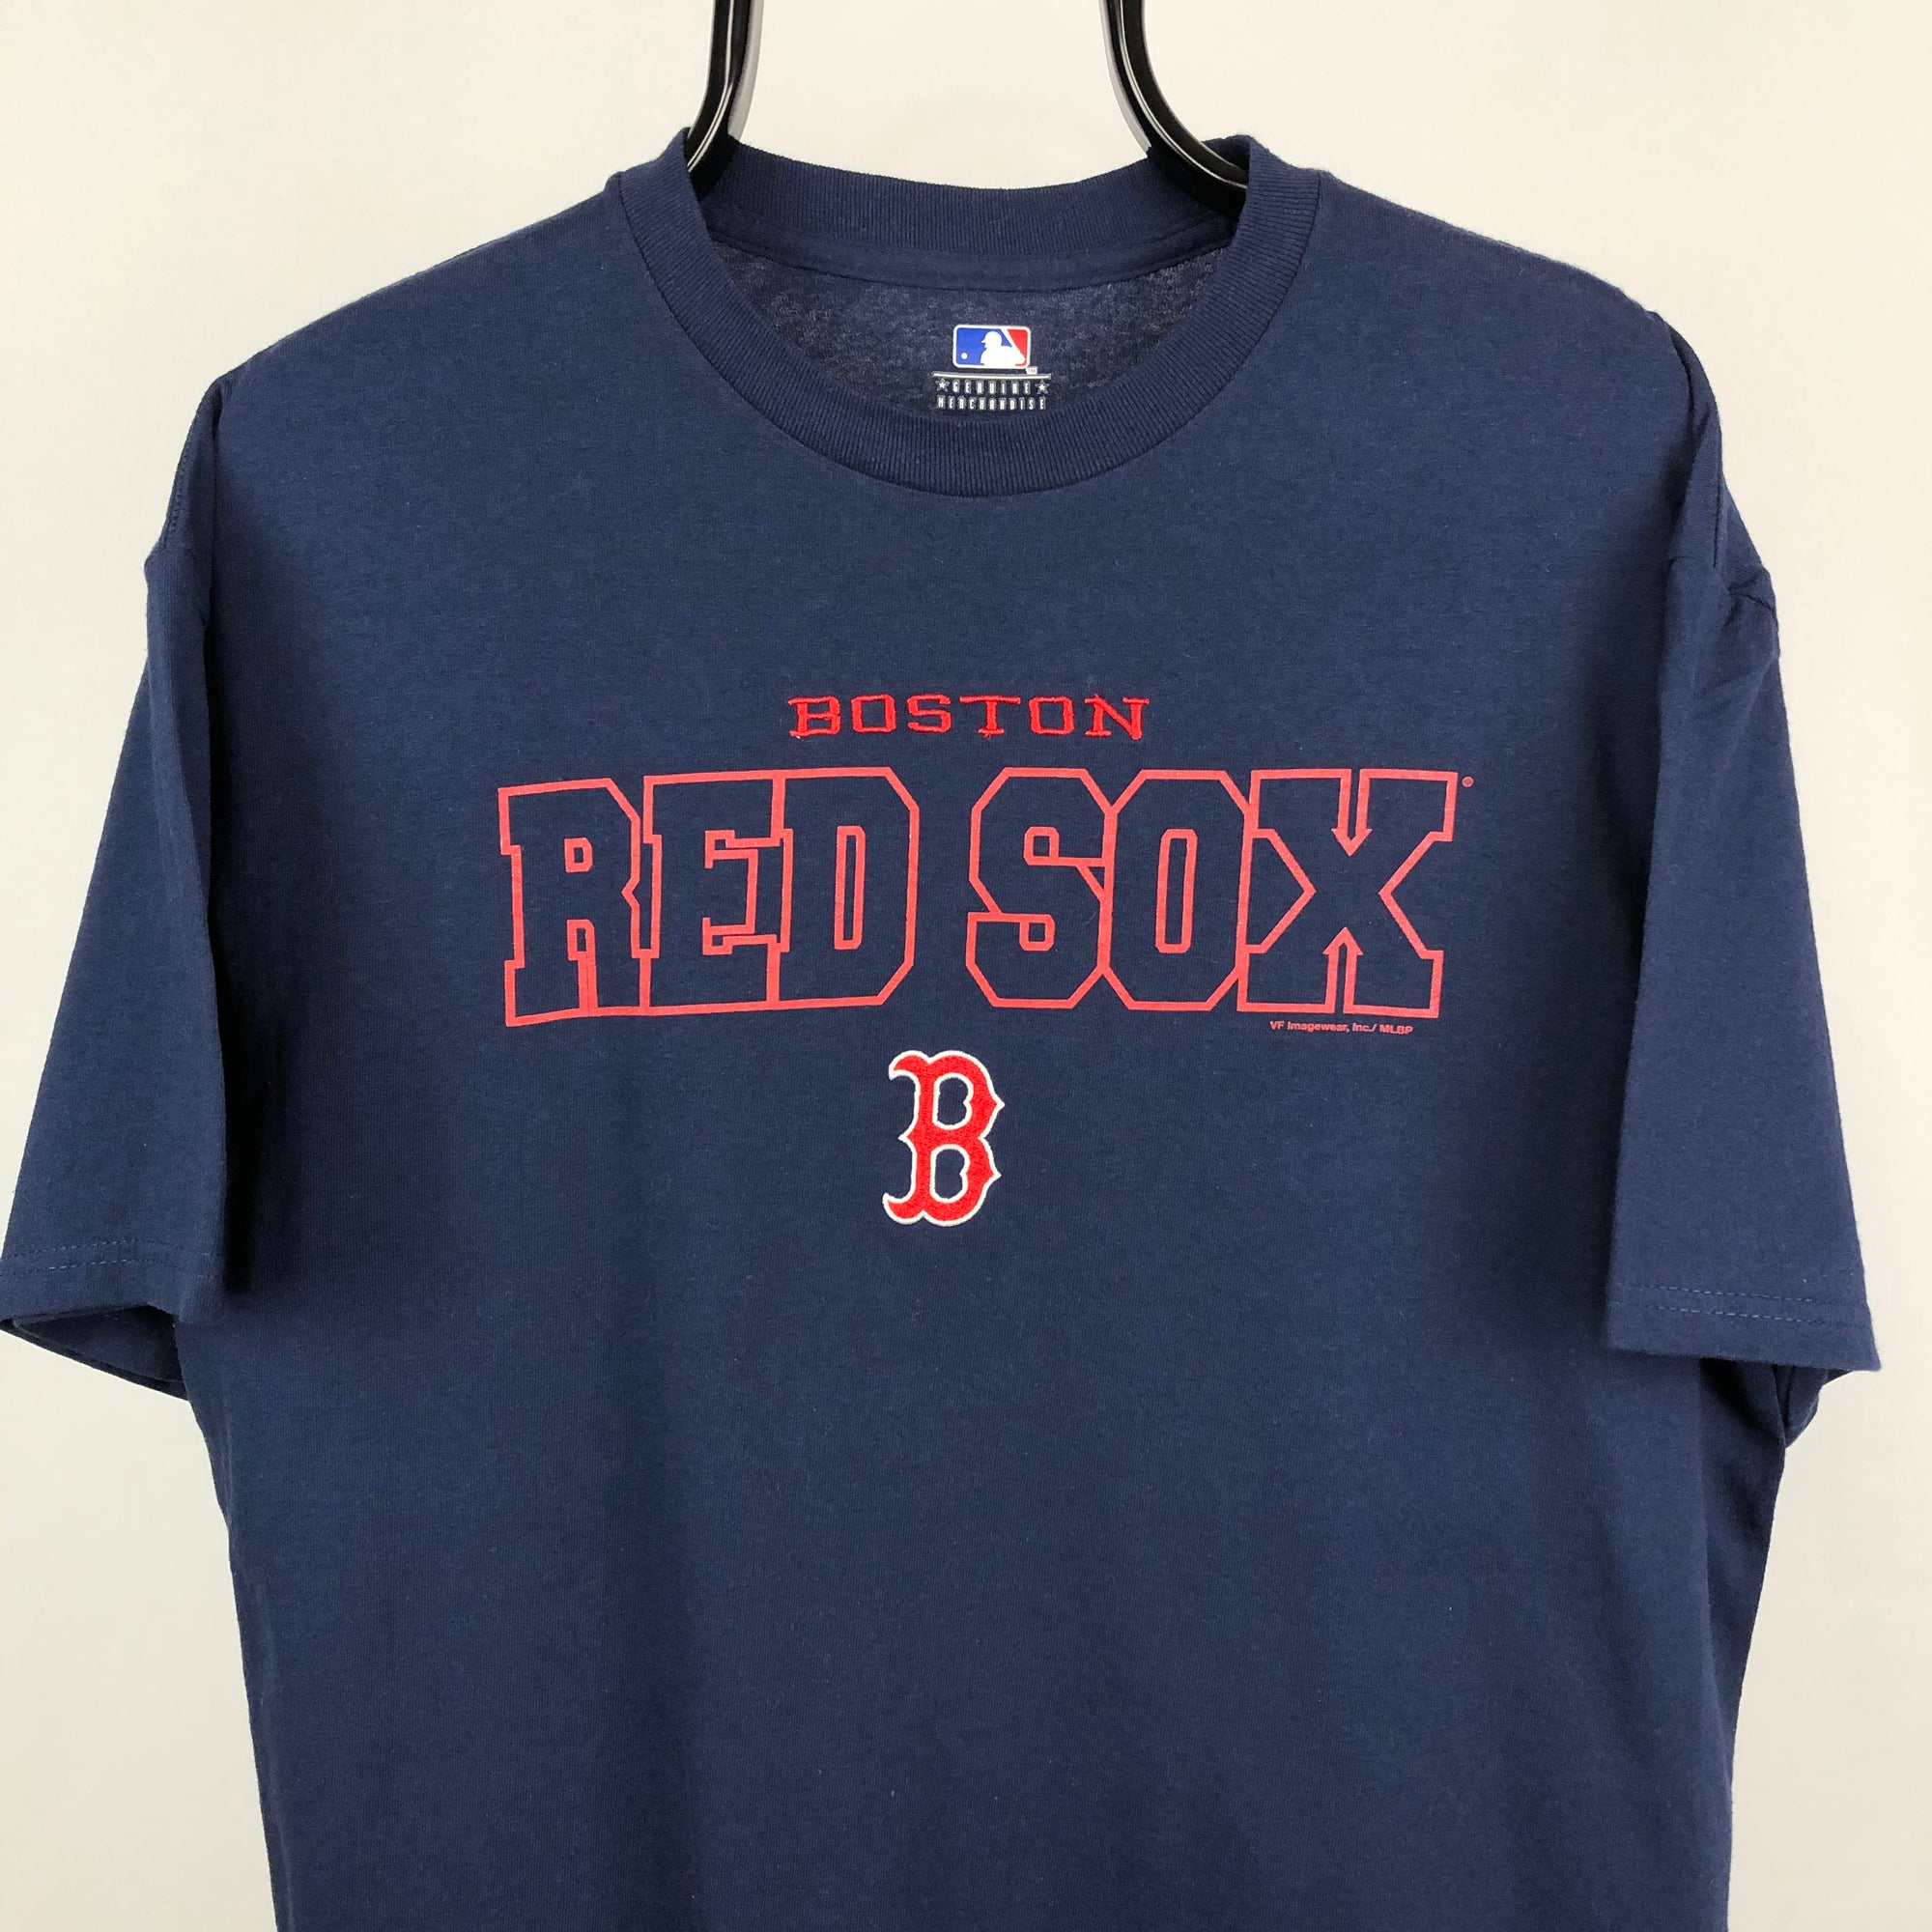 Vintage Boston Red Sox Tee - Men's Large/Women's XL